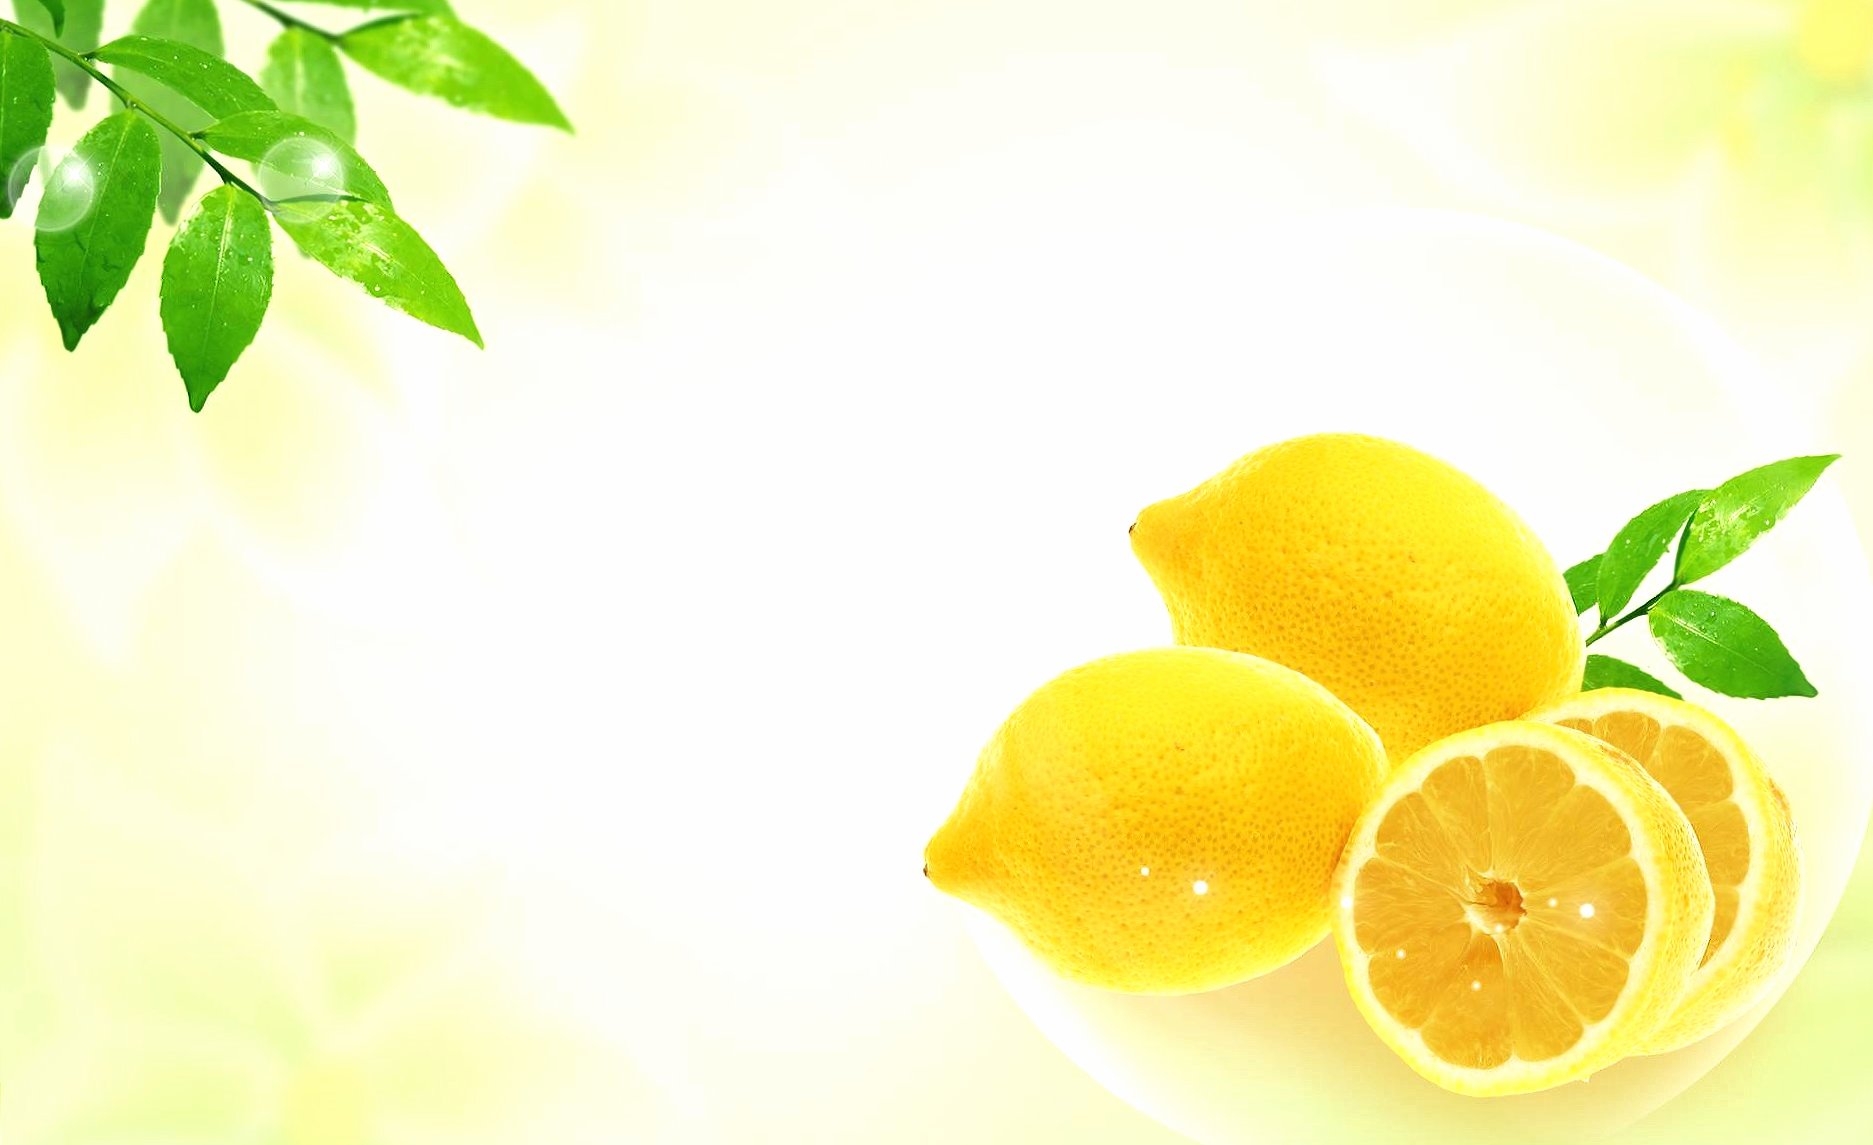 Lemons at 2048 x 2048 iPad size wallpapers HD quality